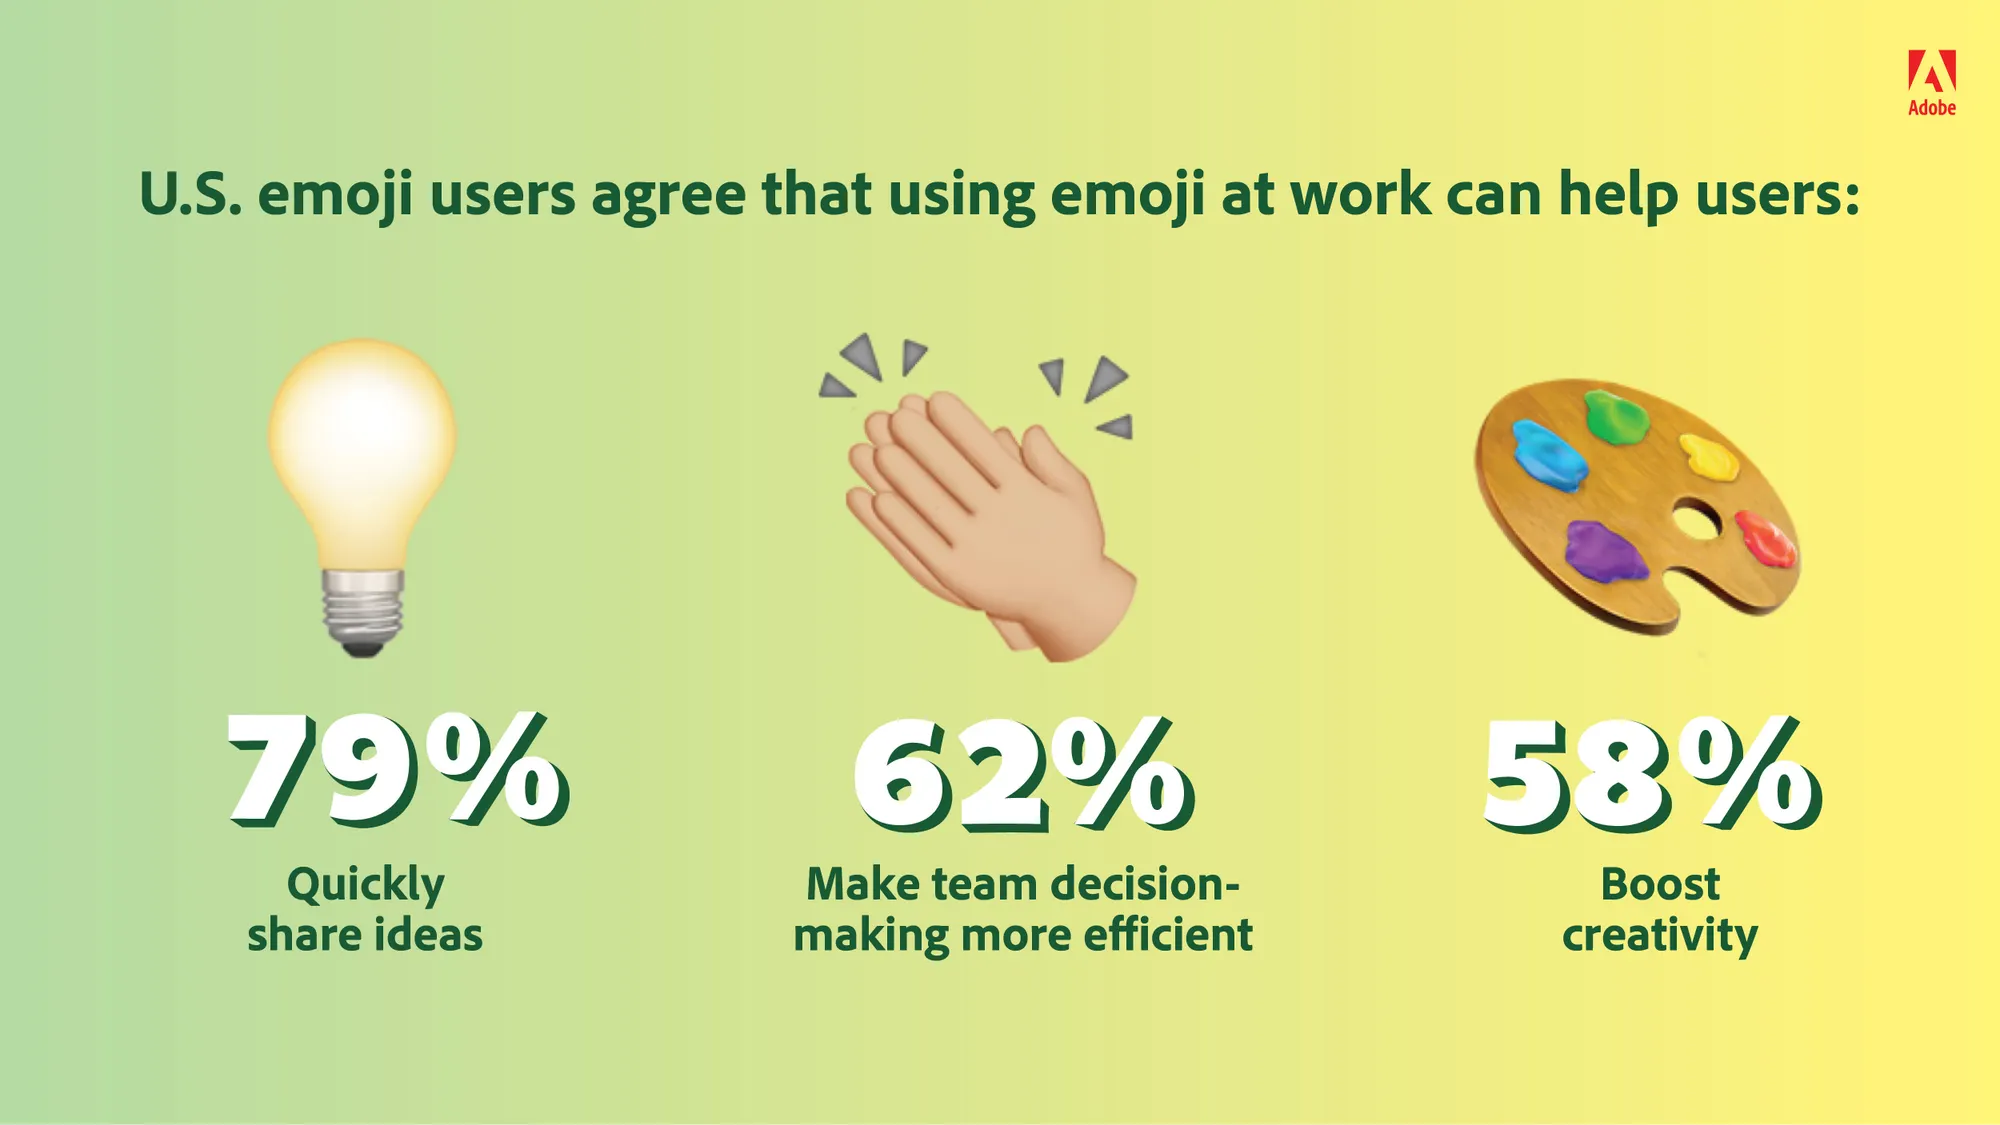 U.S. emoji users agree that using emoji at work can help users. 